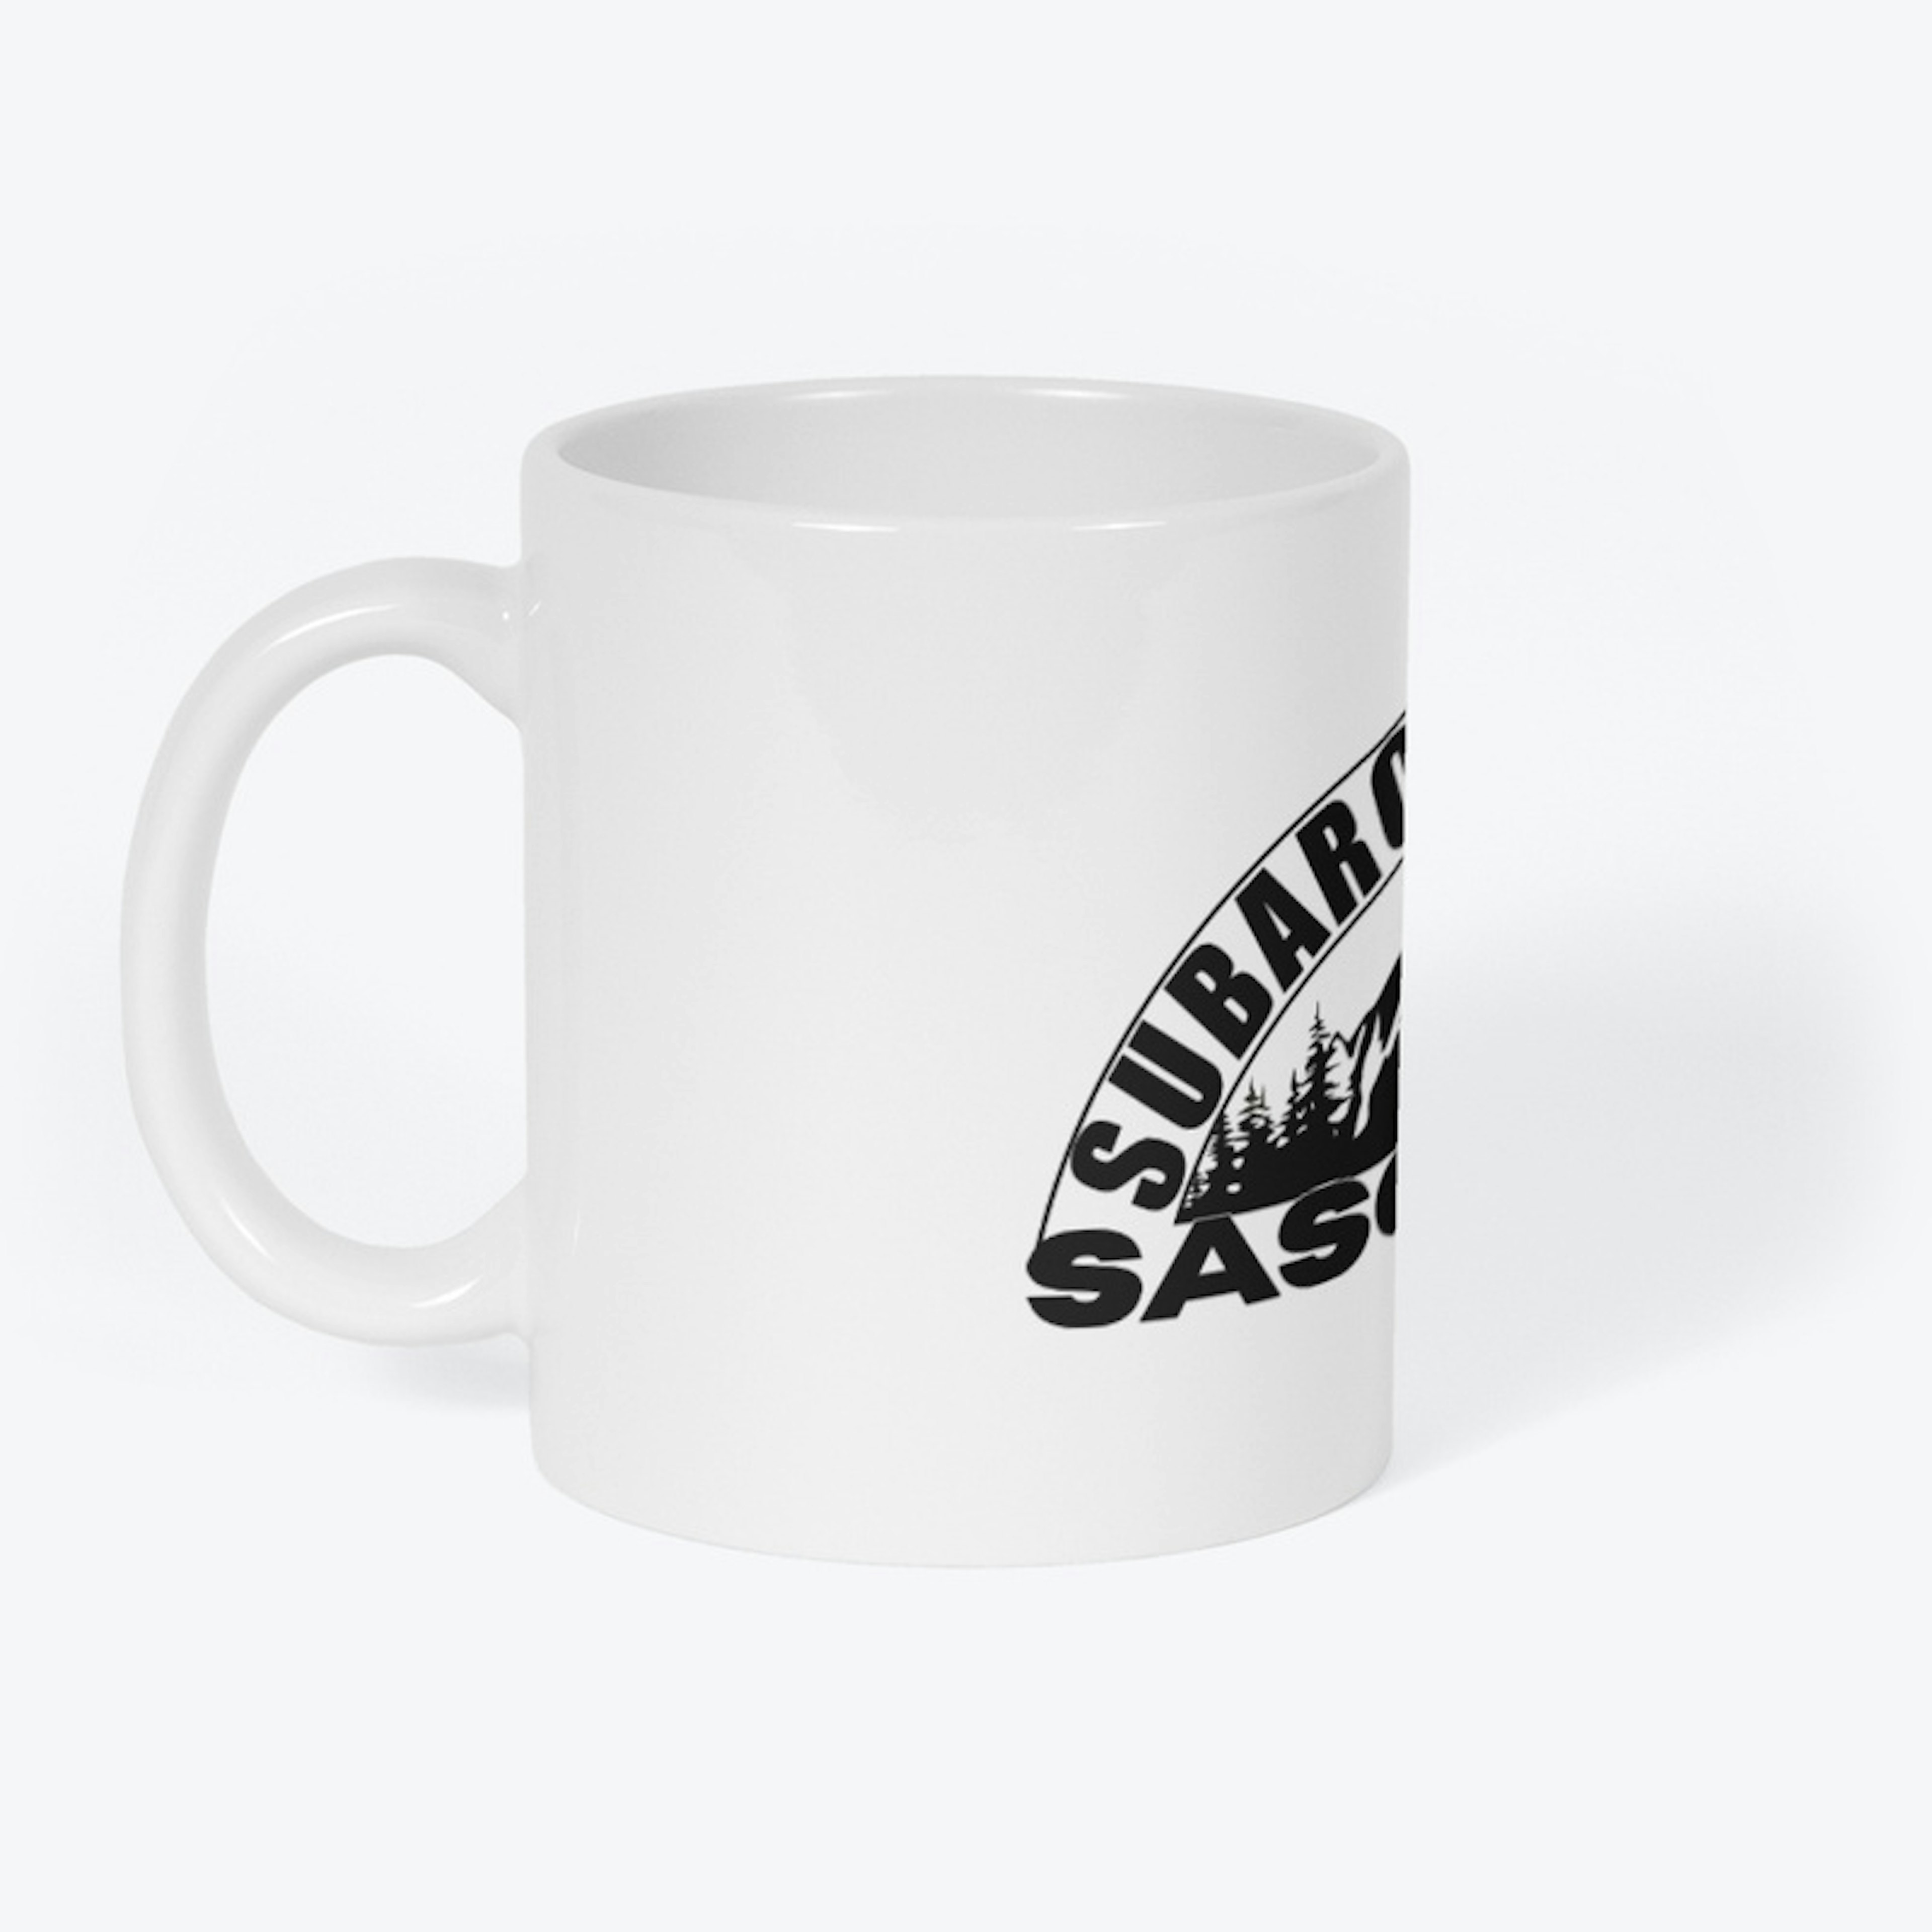 SAS Coffee Mug - White